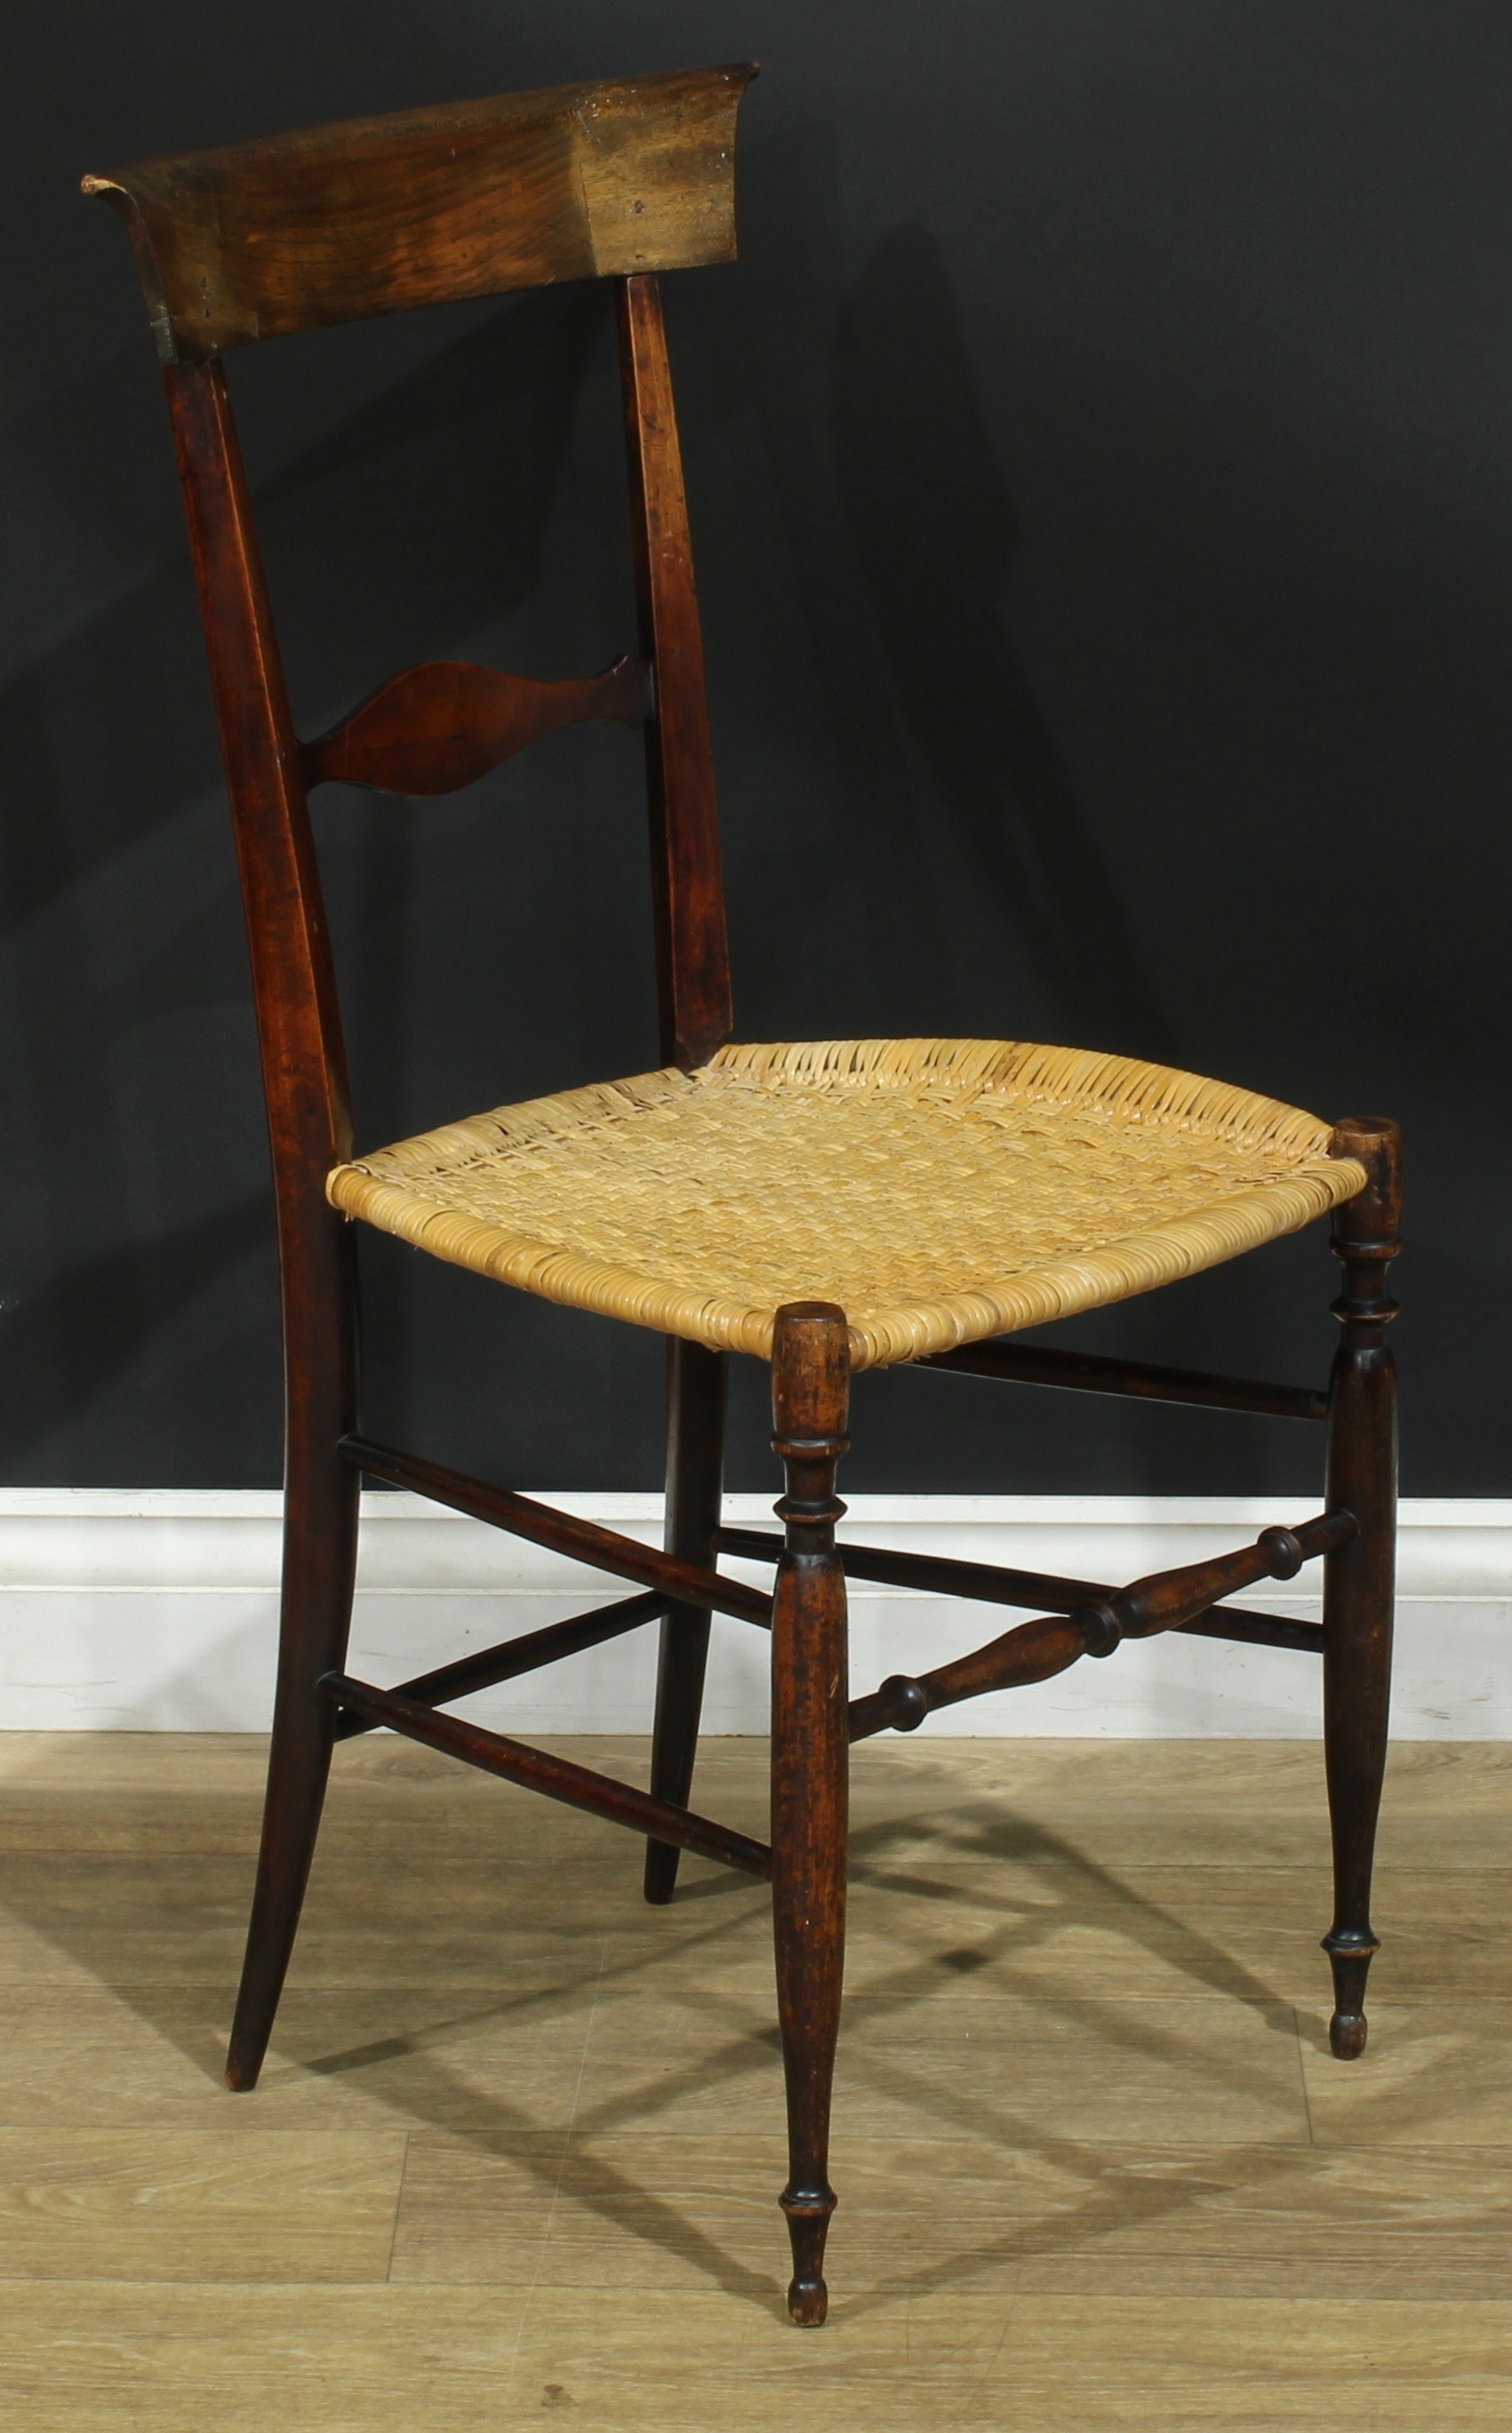 A 19th century Italian cherry Chiavari chair, designed by Giovanni Battista Ravenna, woven cane - Image 2 of 4